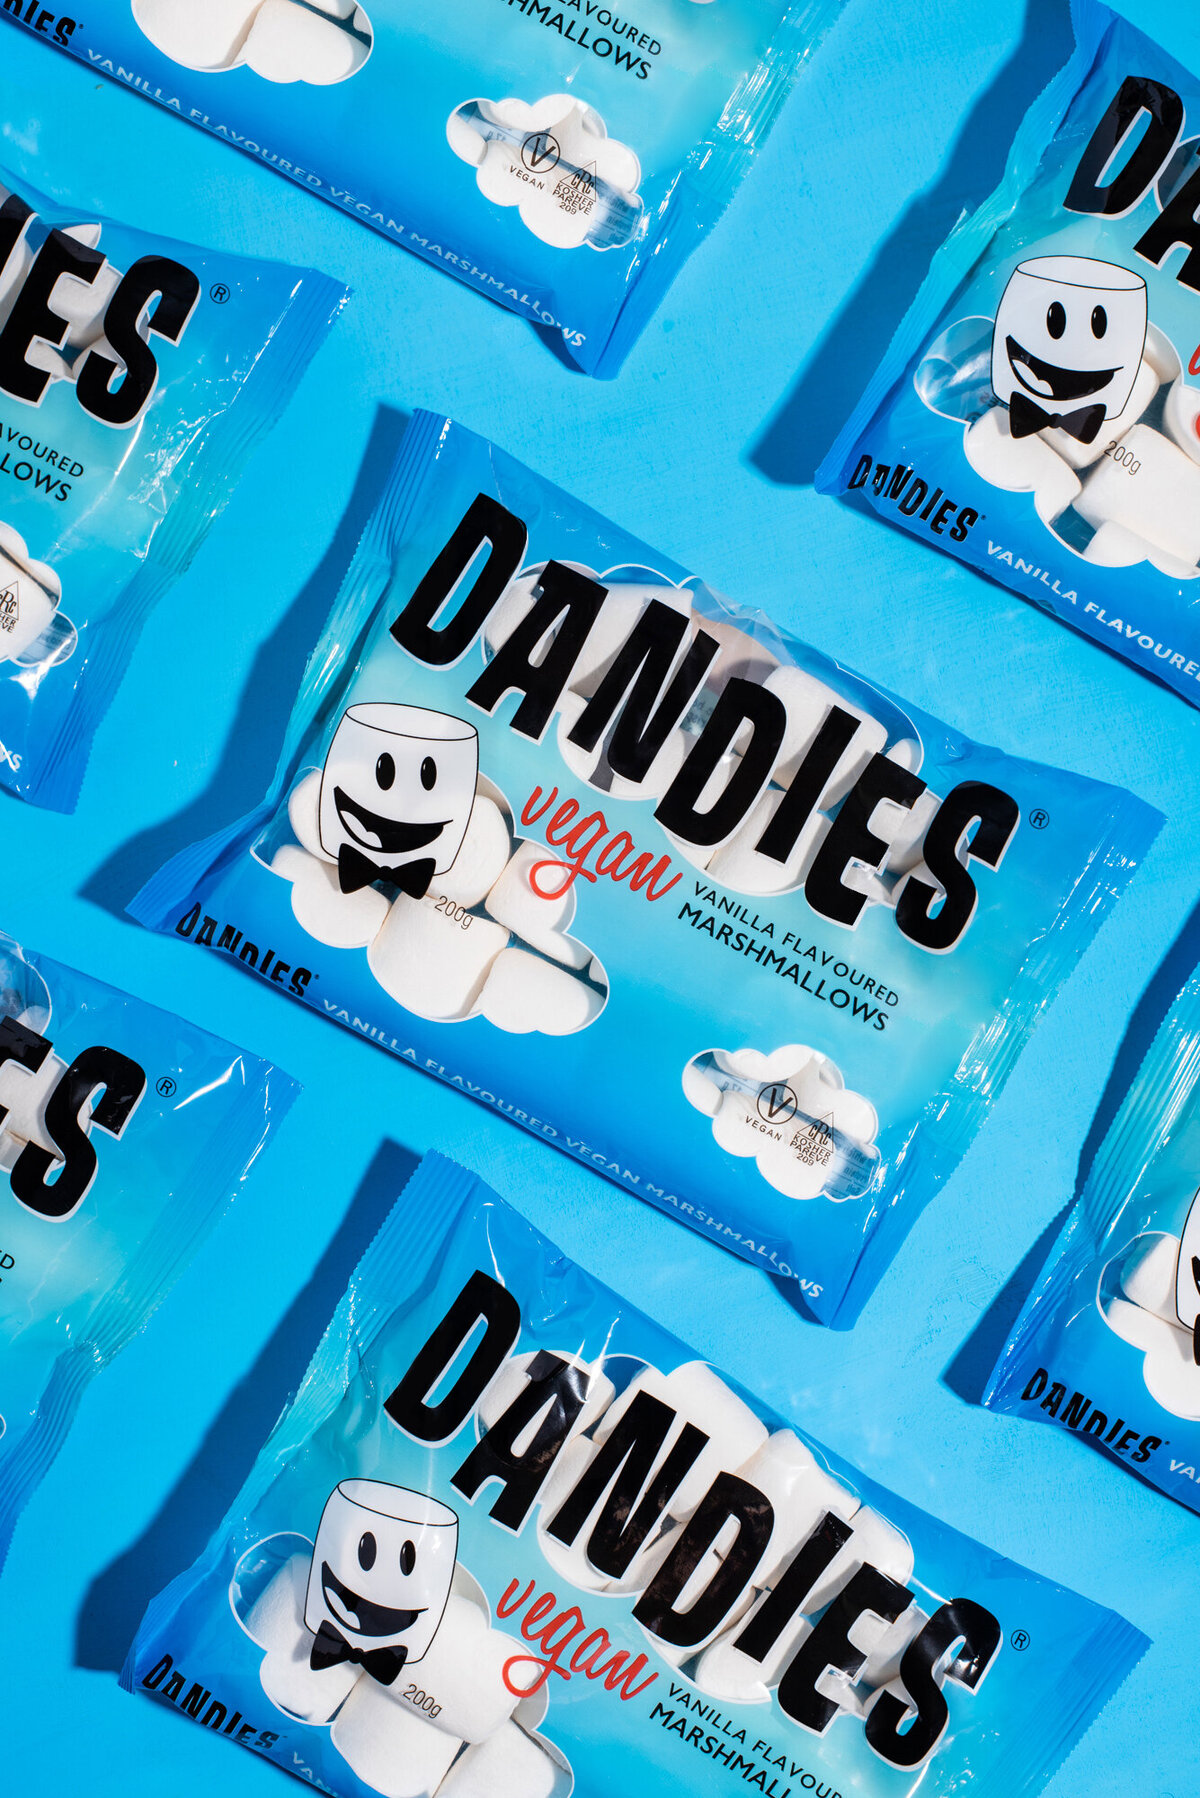 dandies marshmallows packaging UK